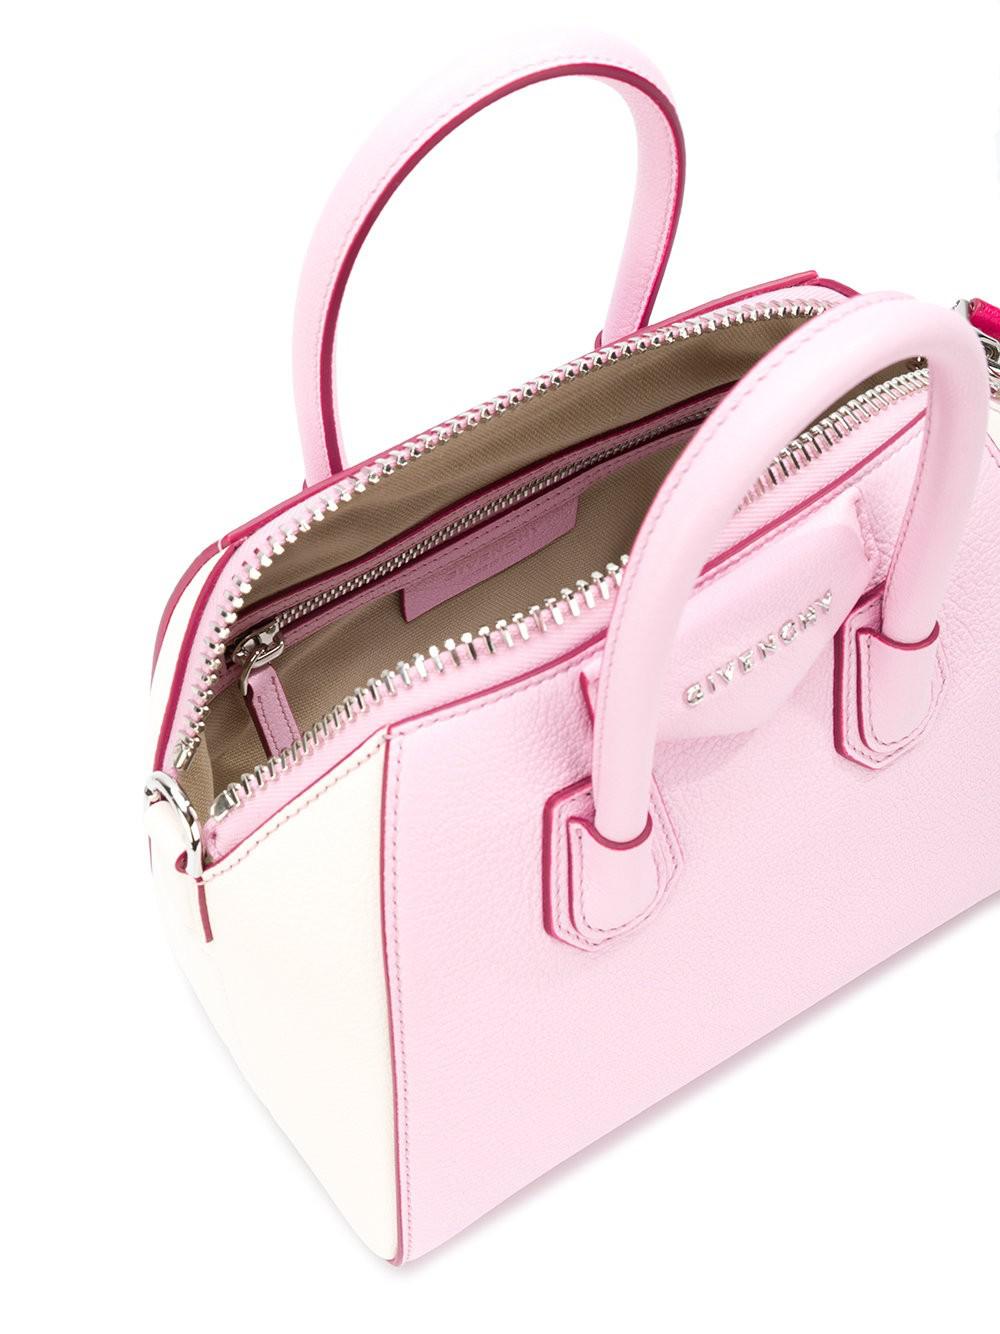 Givenchy Pink Mini Antigona Bag in Pink - Lyst